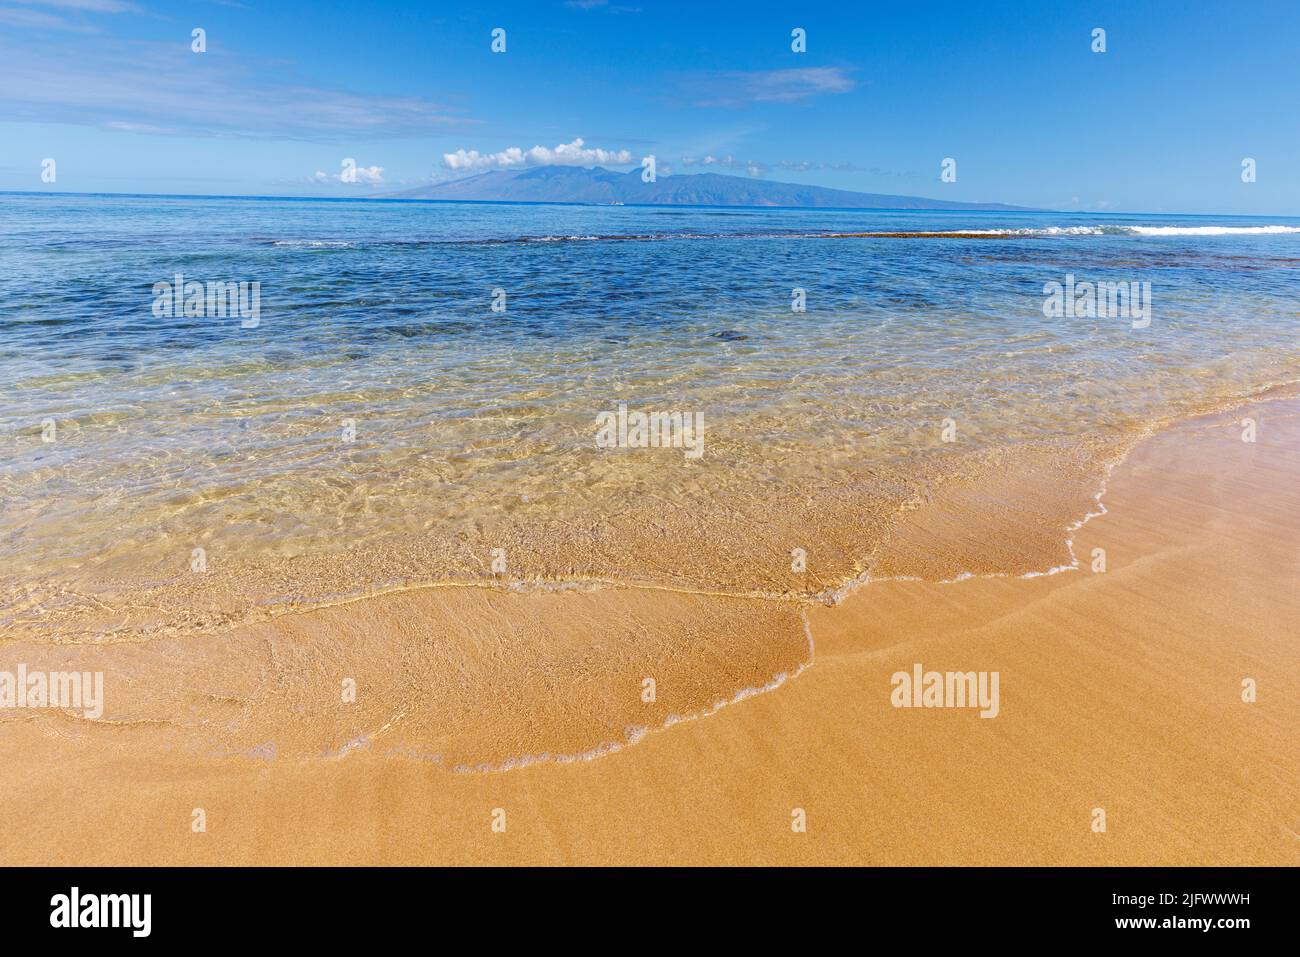 Honokowai beach with calm waves and the island of Molokai in the background, Maui, Hawaii. Stock Photo